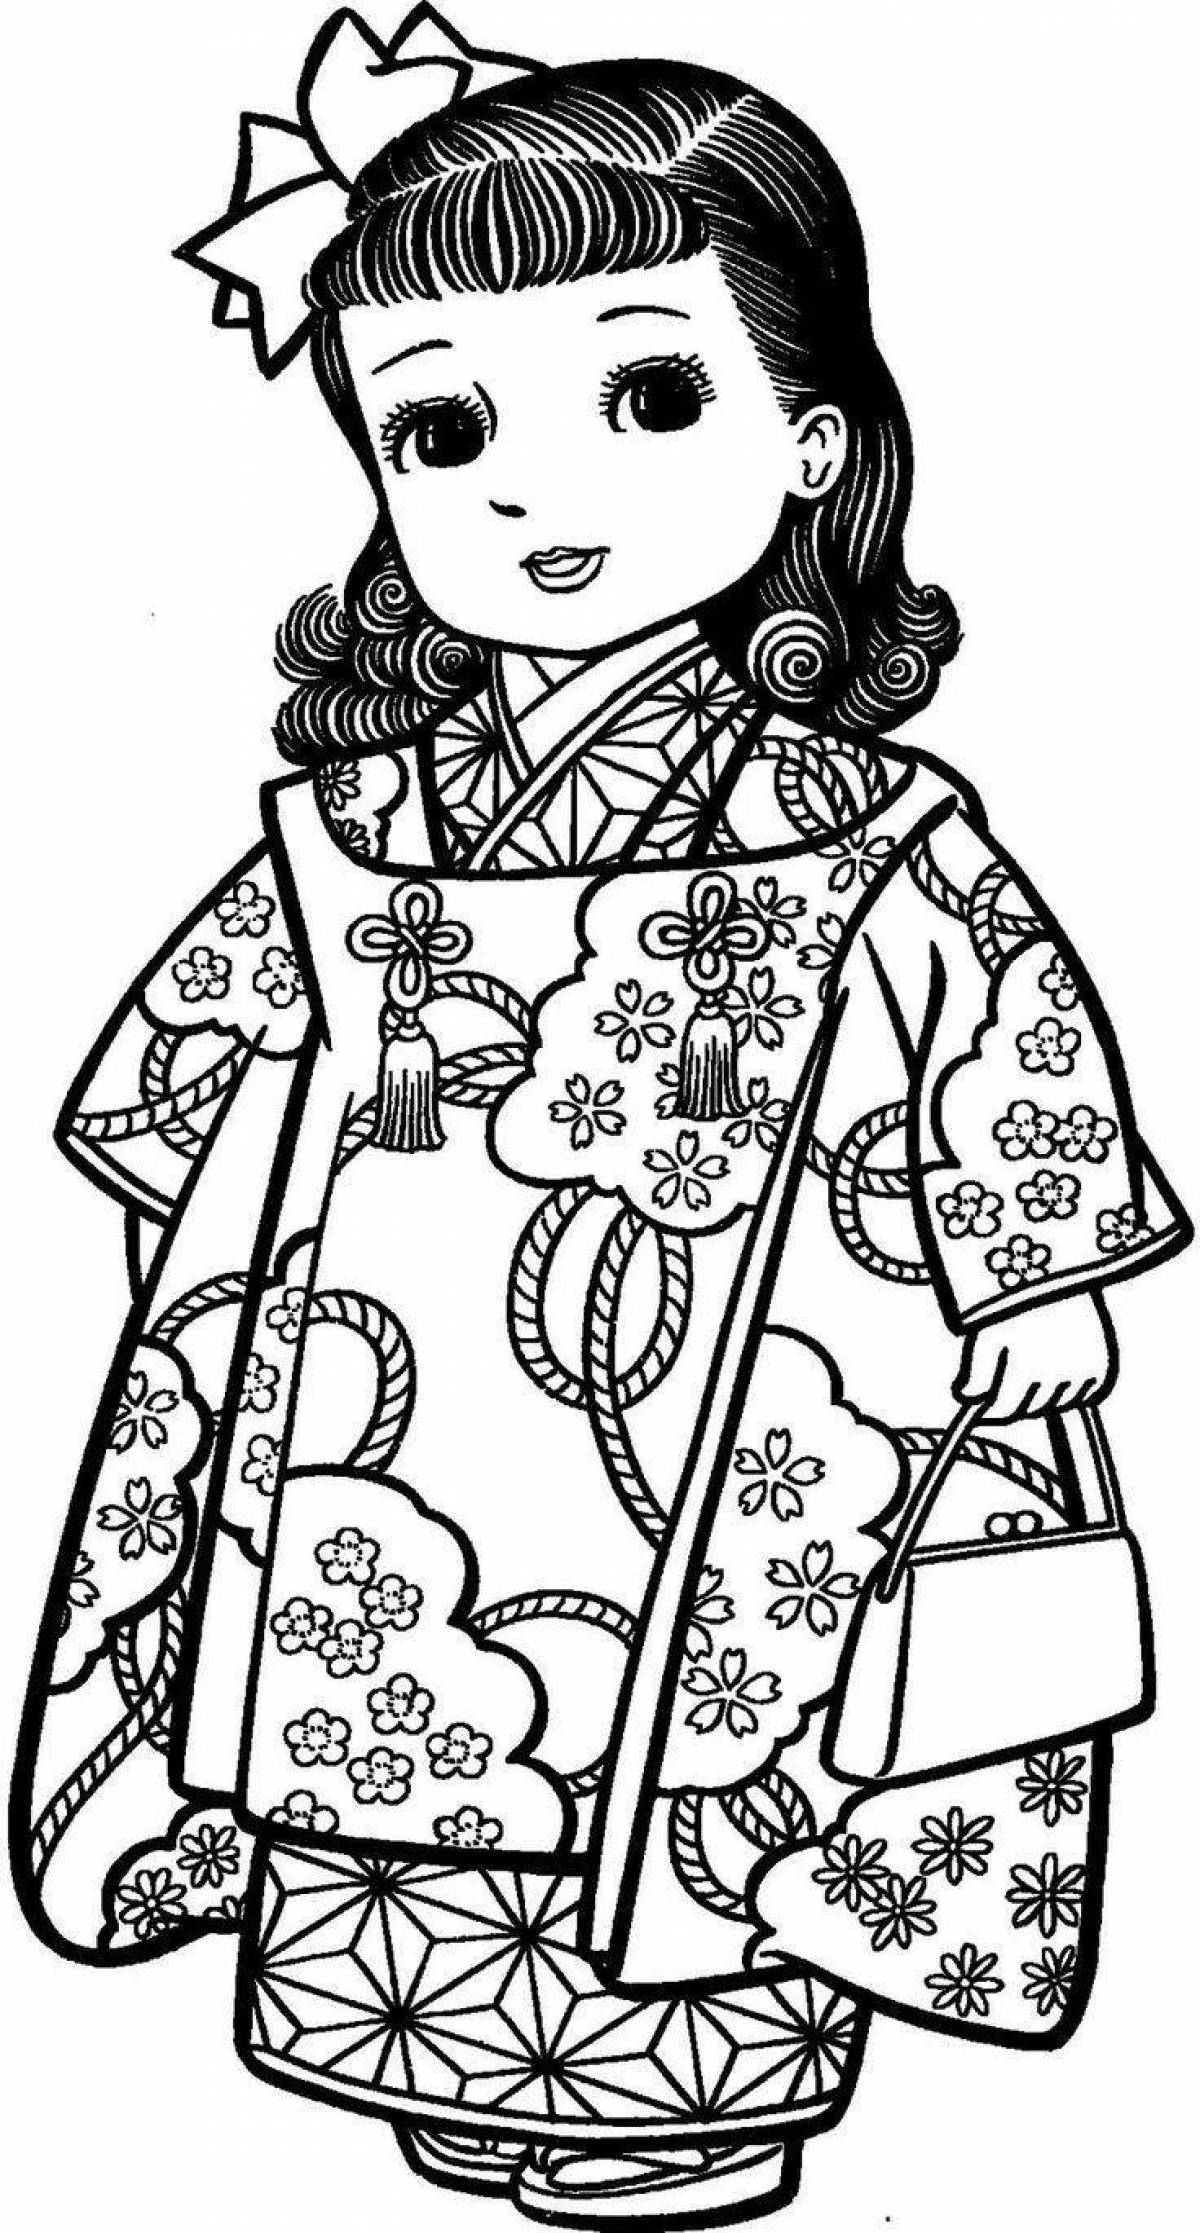 Bright japanese woman in kimono